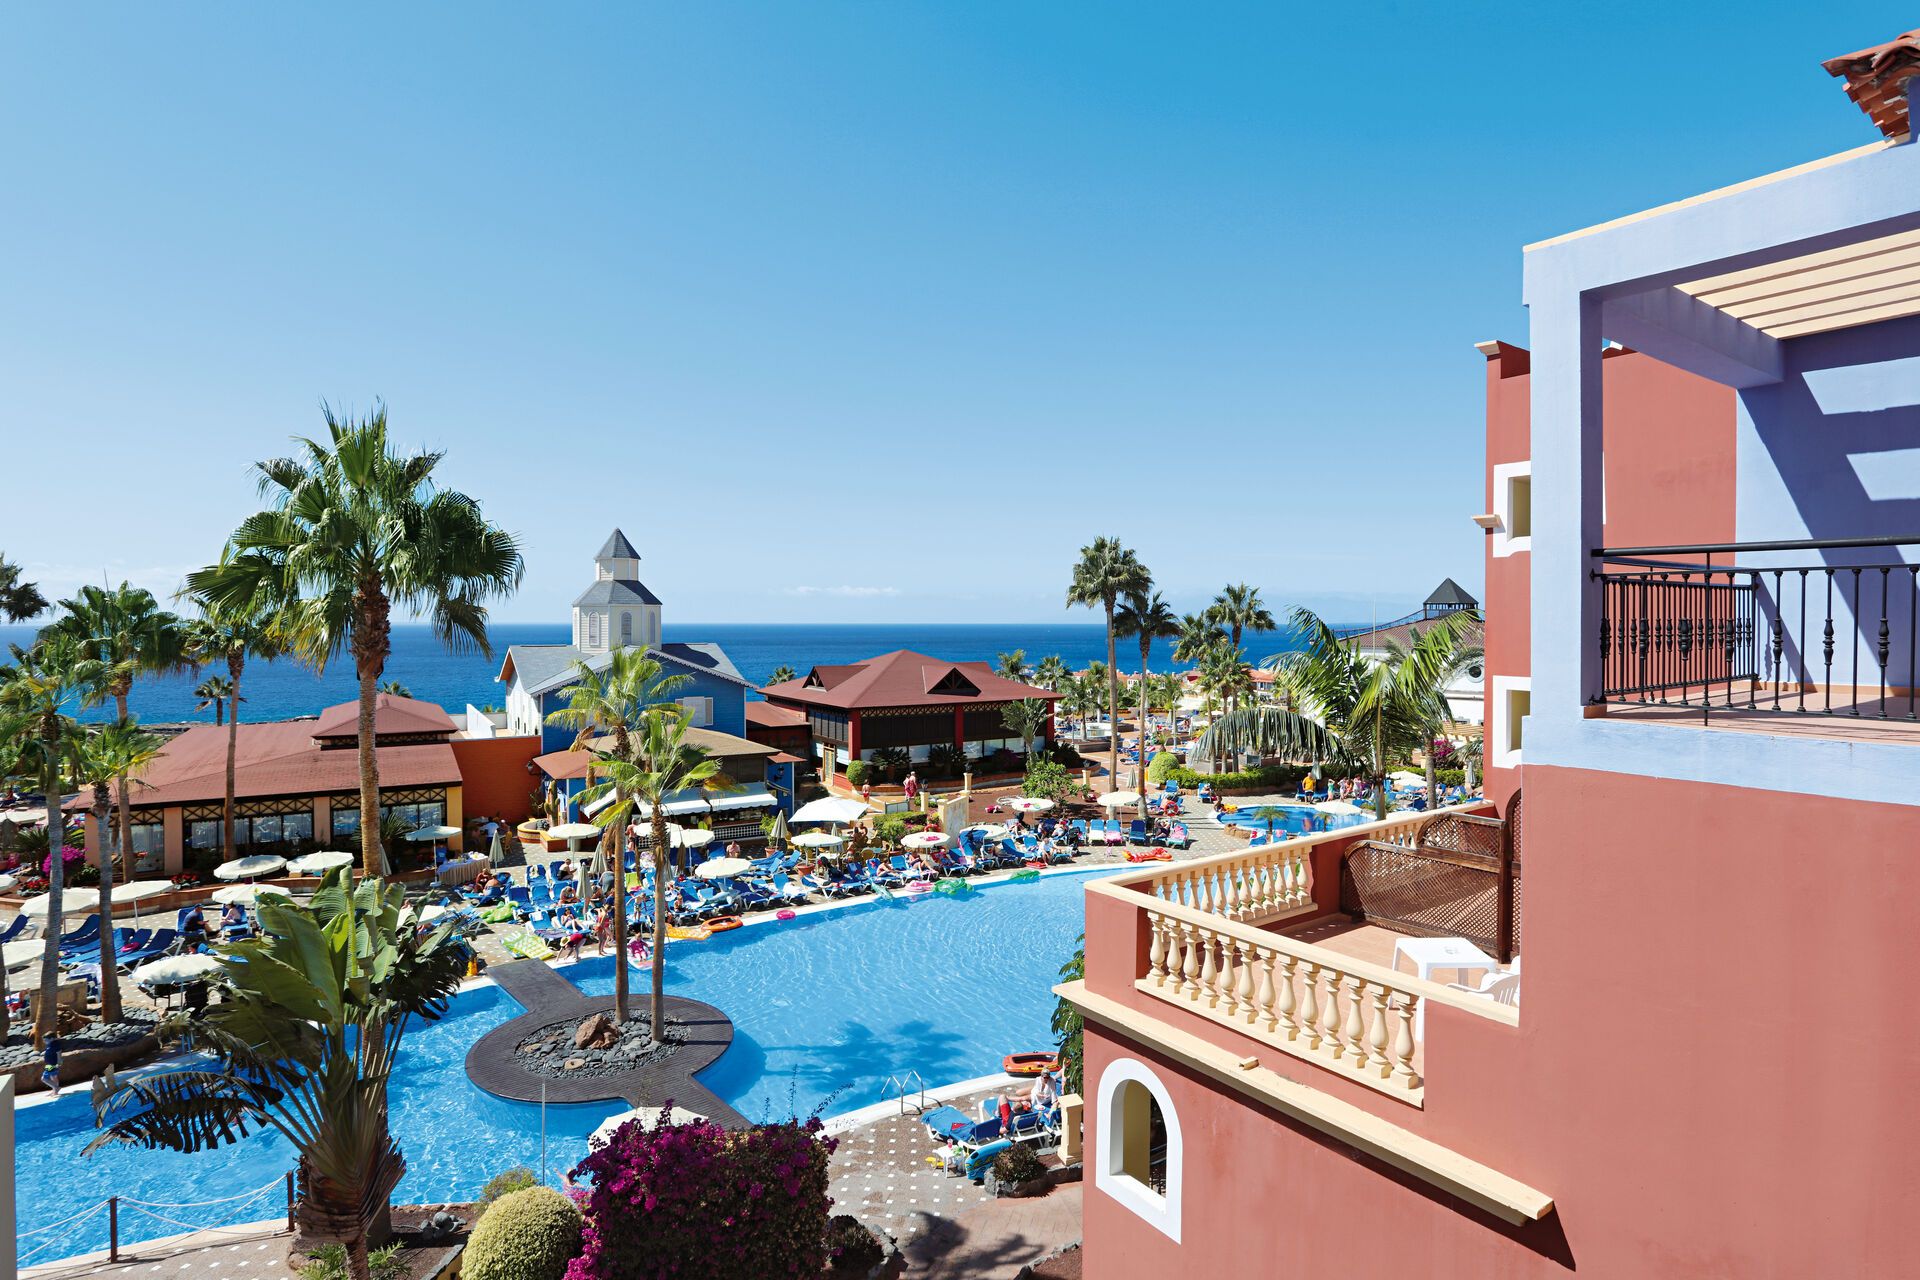 Canaries - Tenerife - Espagne - Hôtel Bahia Principe Sunlight Tenerife 4*